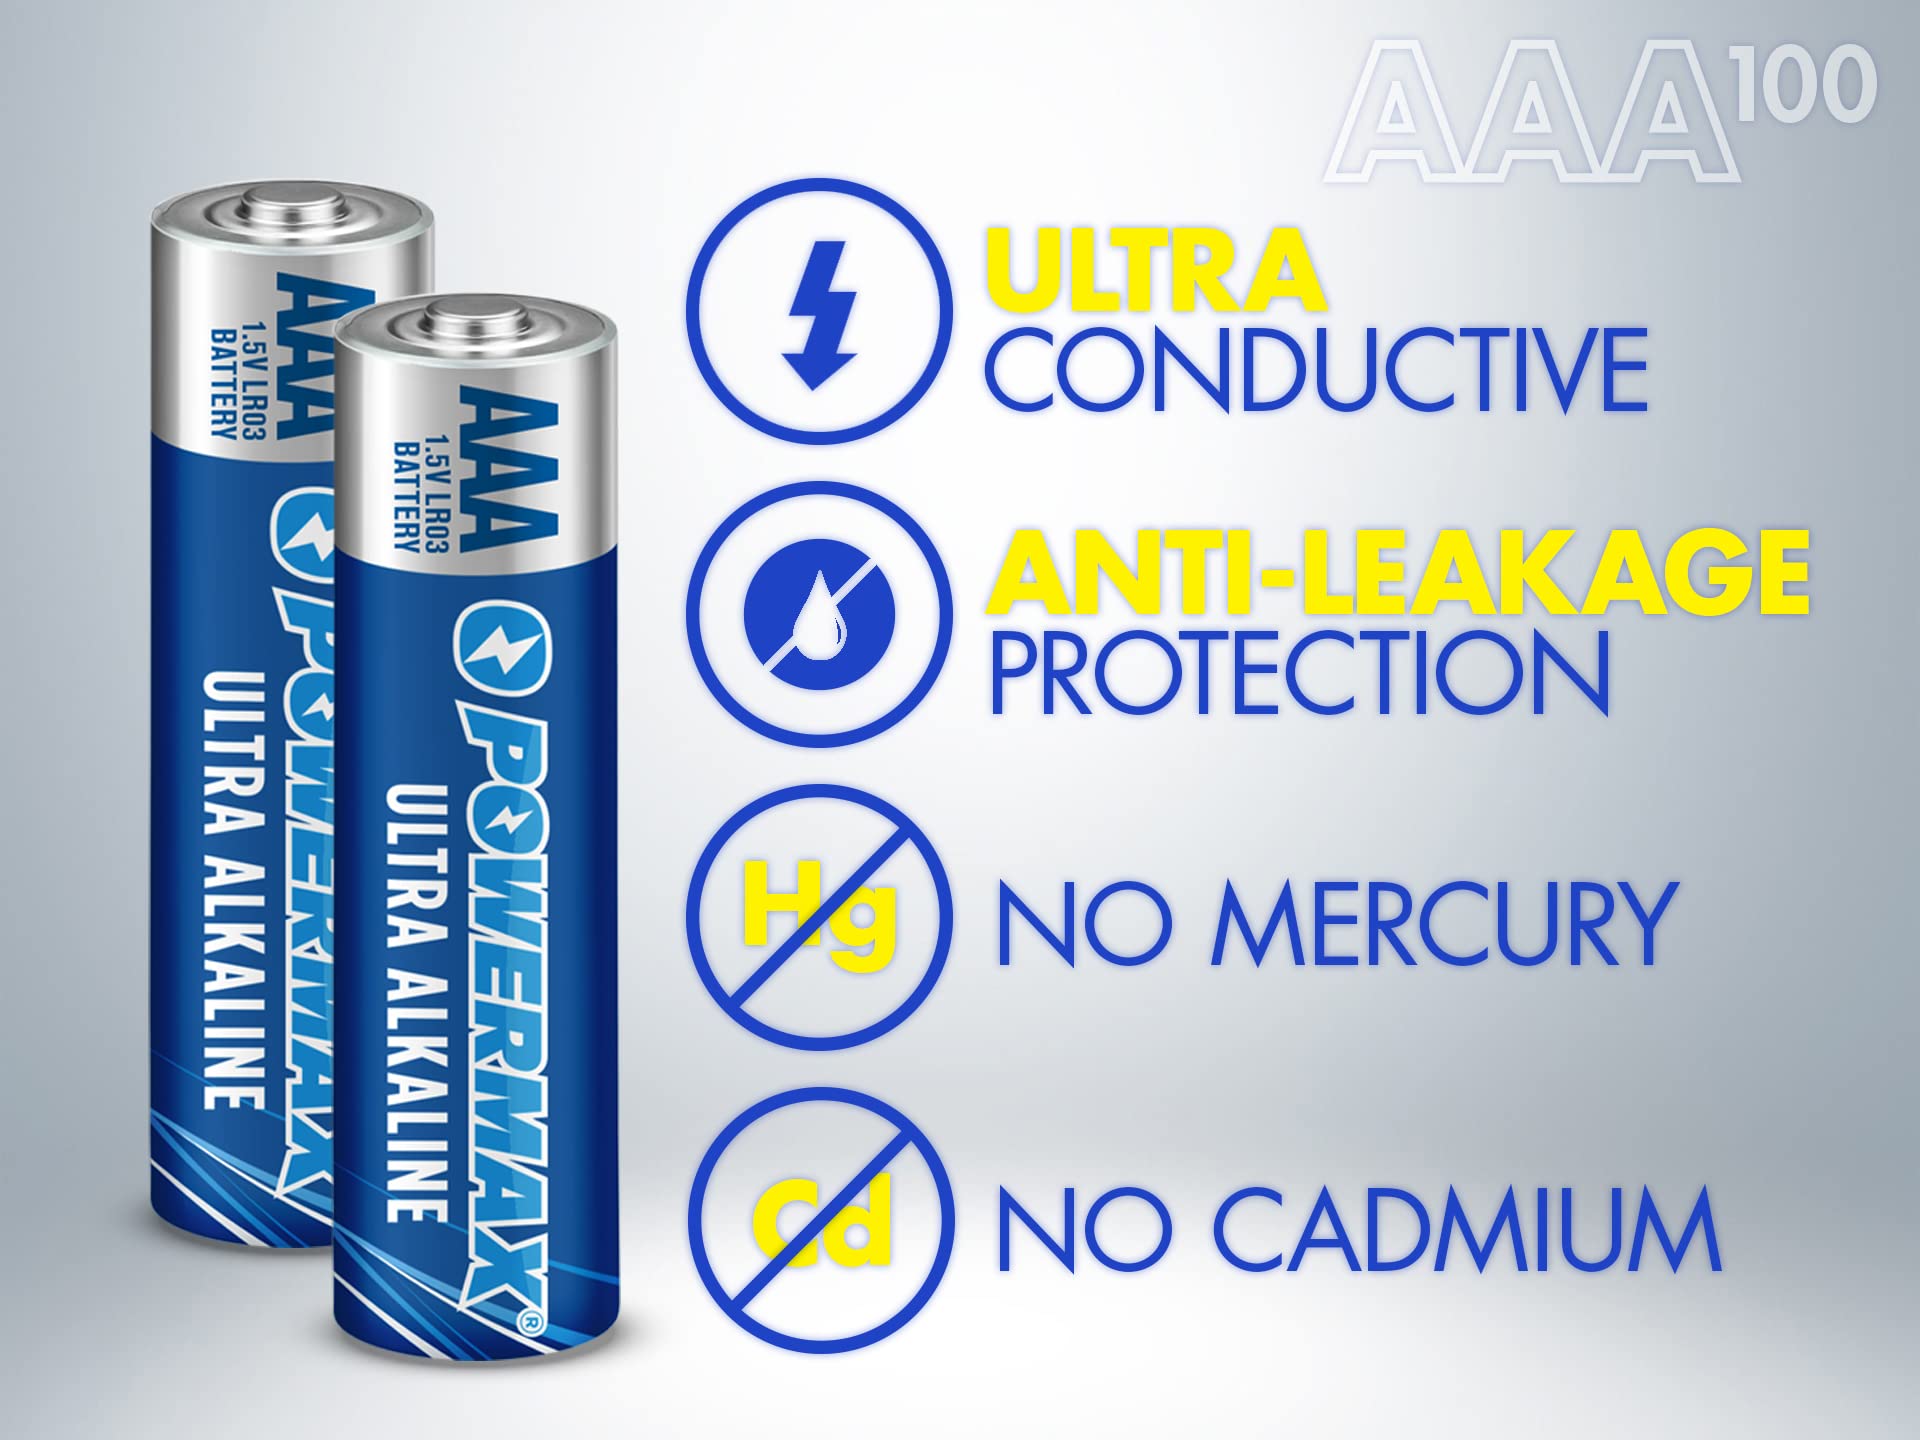 Powermax 100-Count AAA Batteries, Ultra Long Lasting Alkaline Battery, 10-Year Shelf Life, Reclosable Packaging